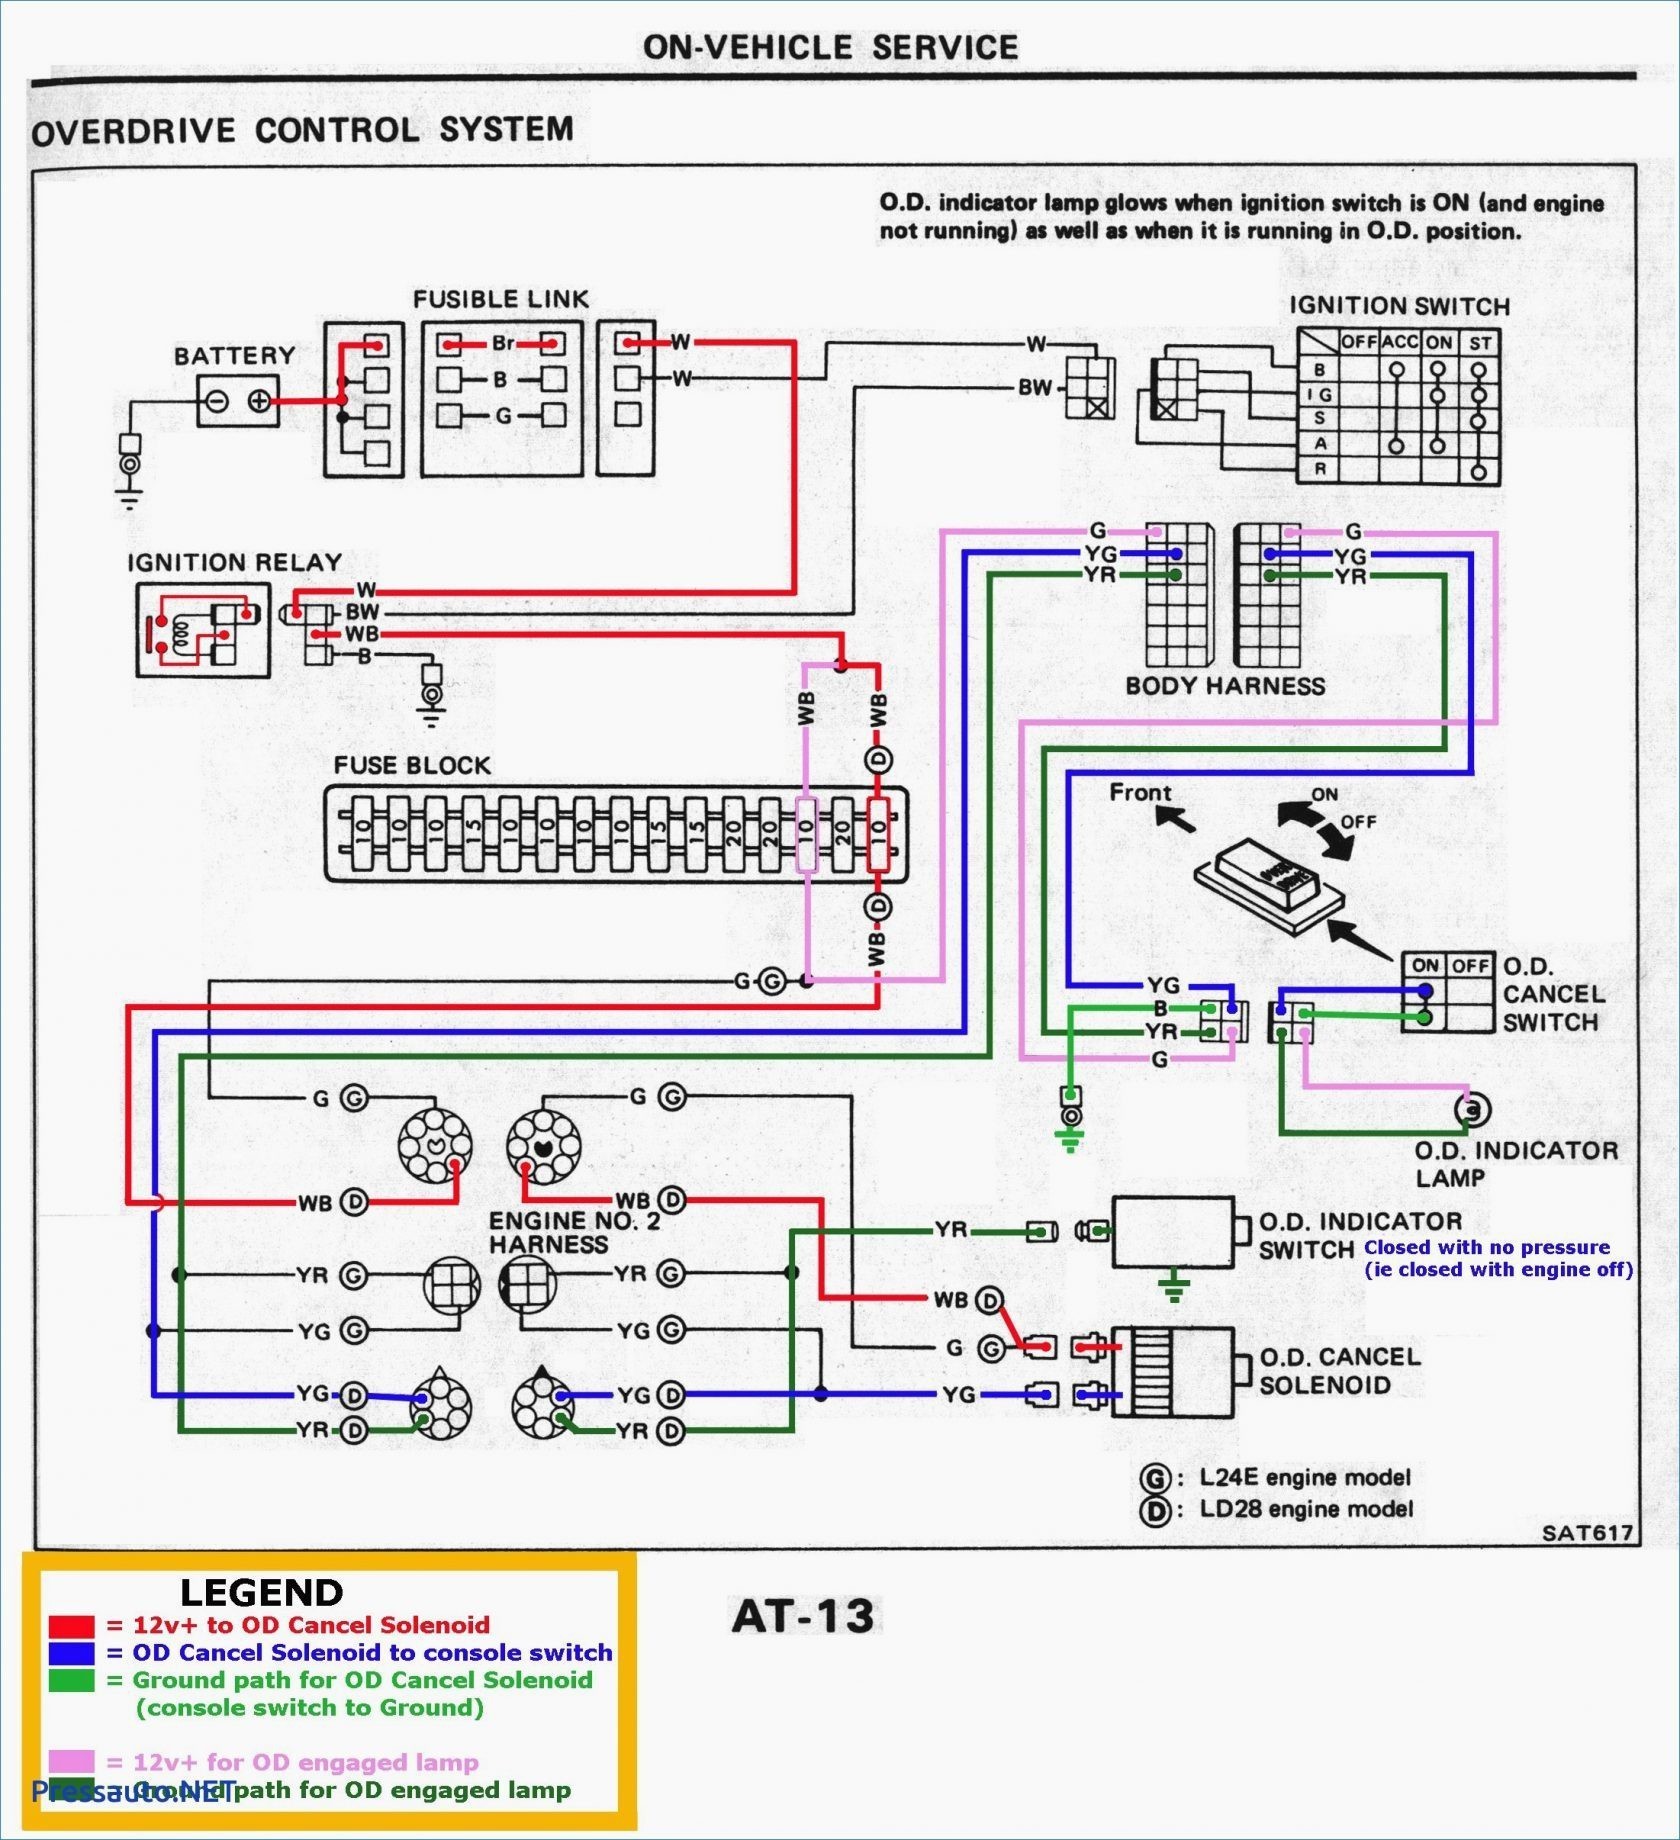 1996 Mitsubishi Eclipse Engine Diagram 98 Eclipse Engine Diagram Wiring Diagram Datasource Of 1996 Mitsubishi Eclipse Engine Diagram